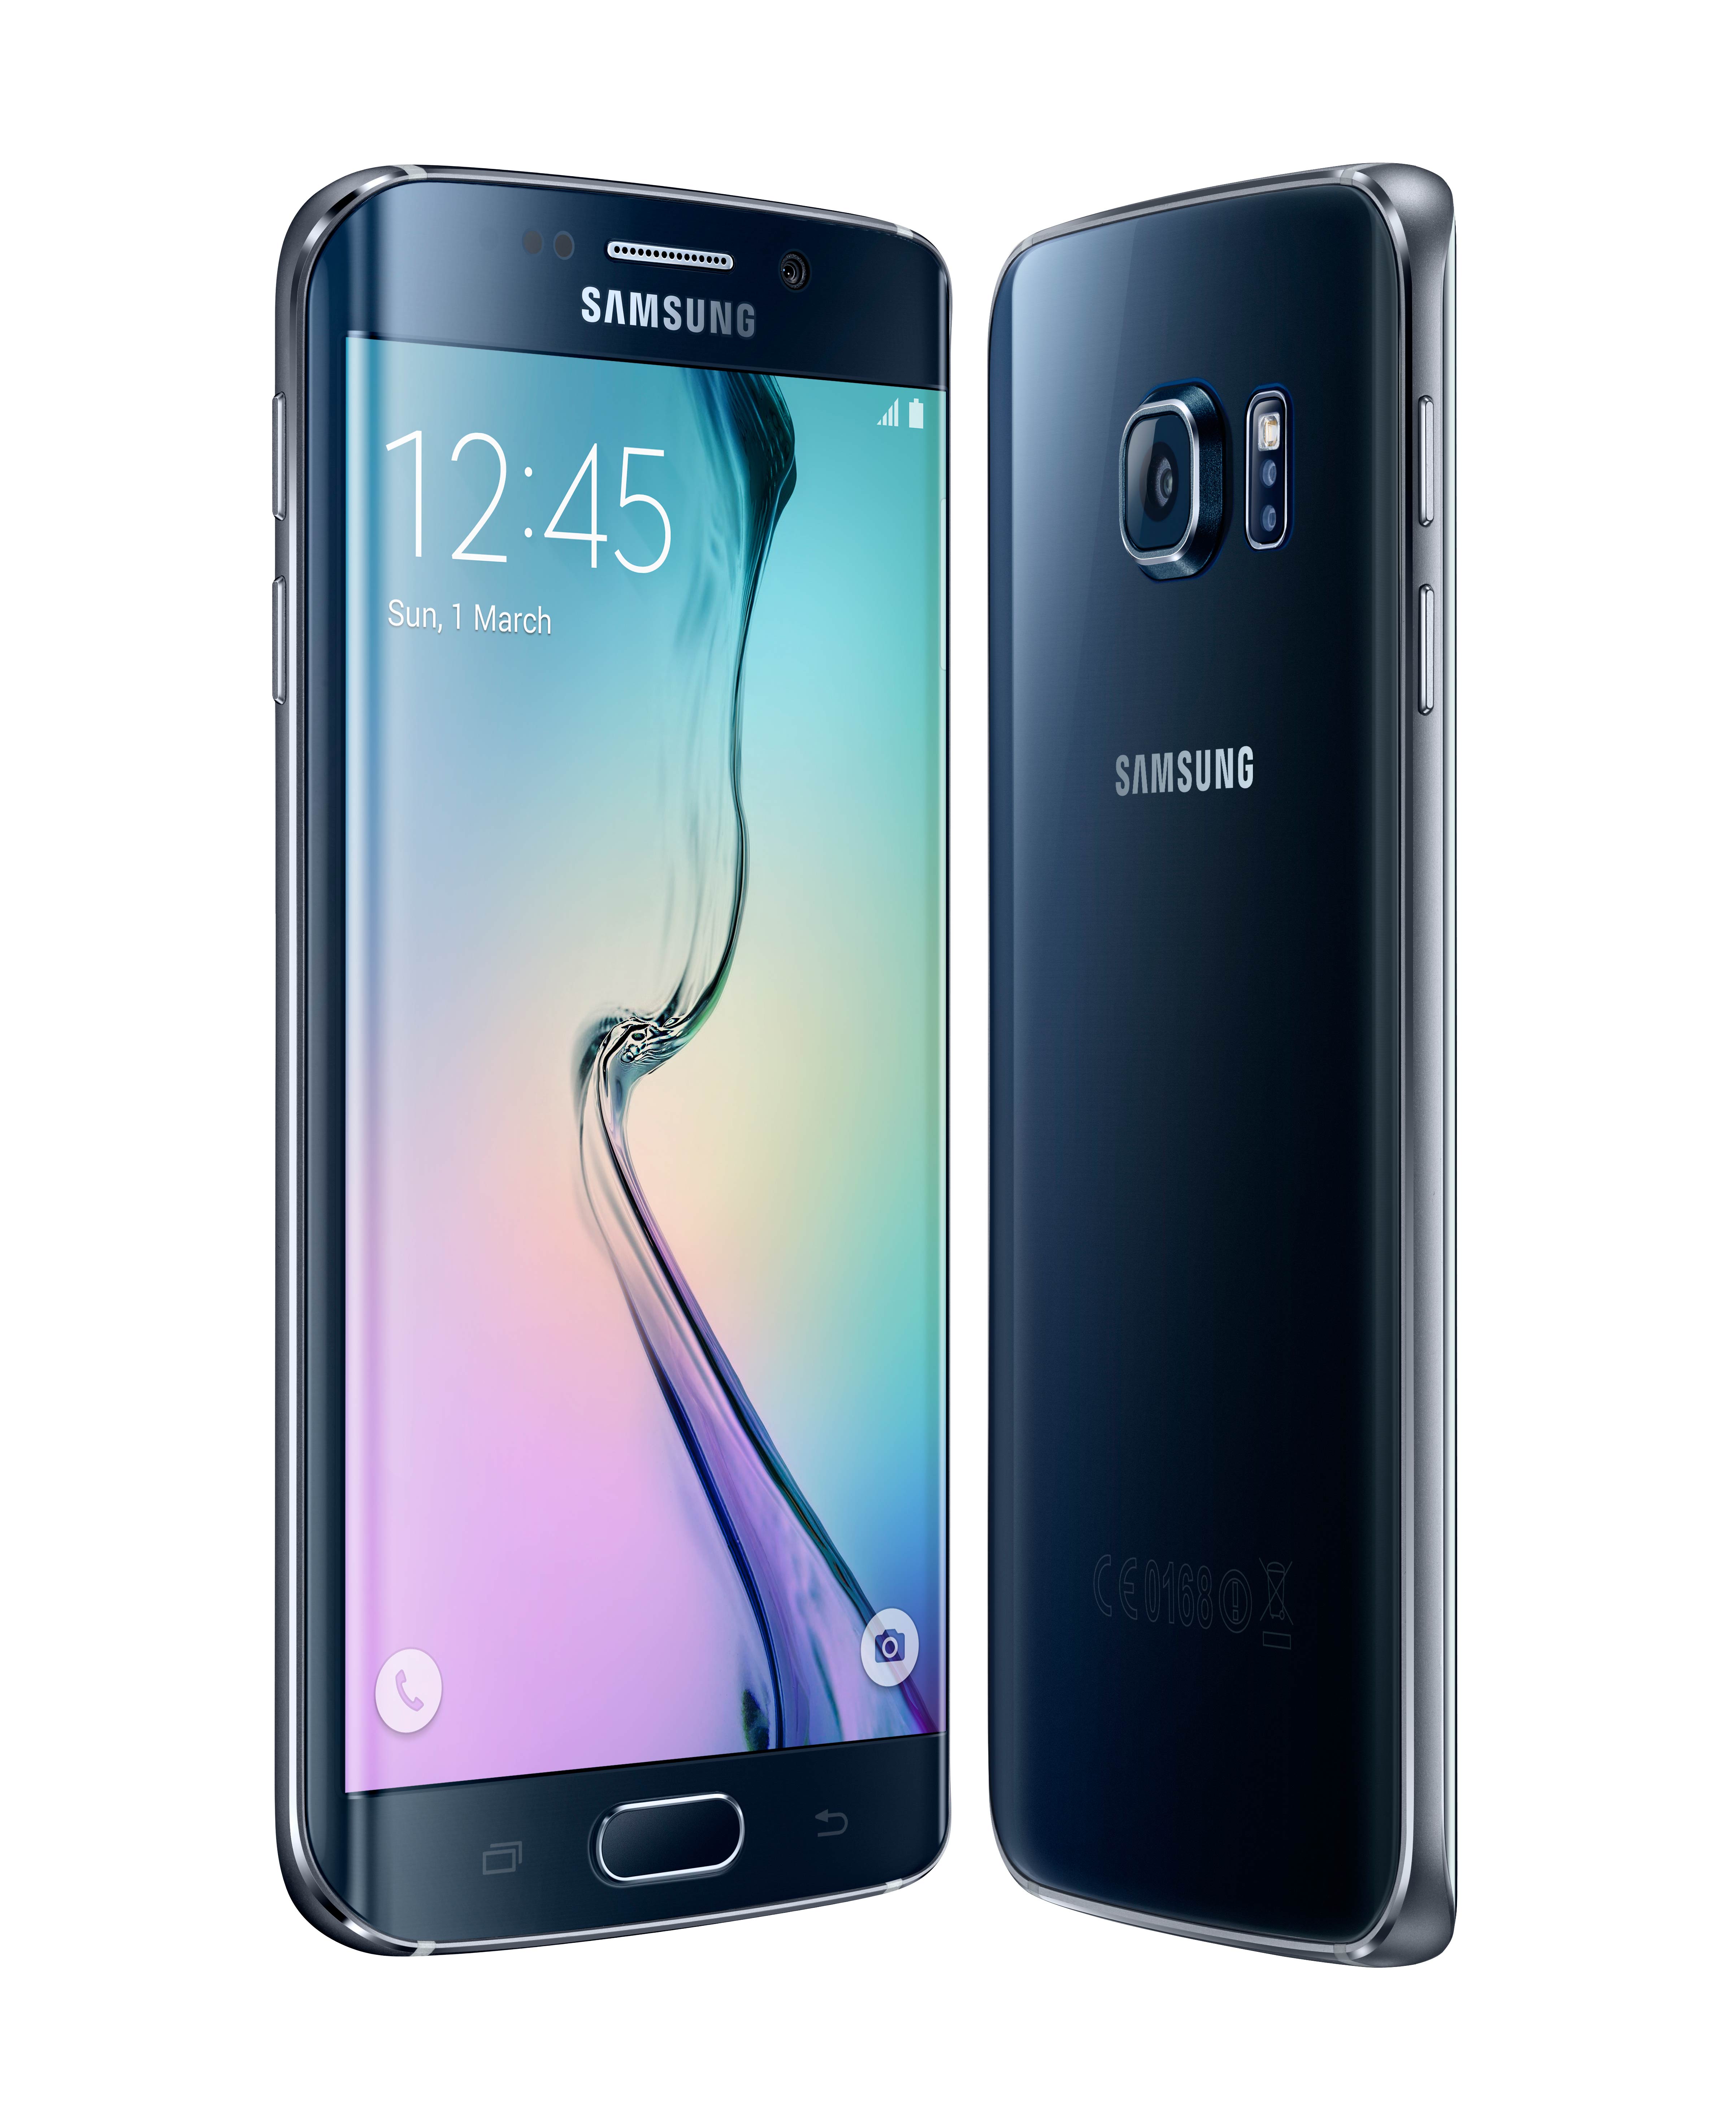 Singtel Samsung Galaxy S6 4G+ And Galaxy S6 edge 4G+ Price Plans Â« Blog